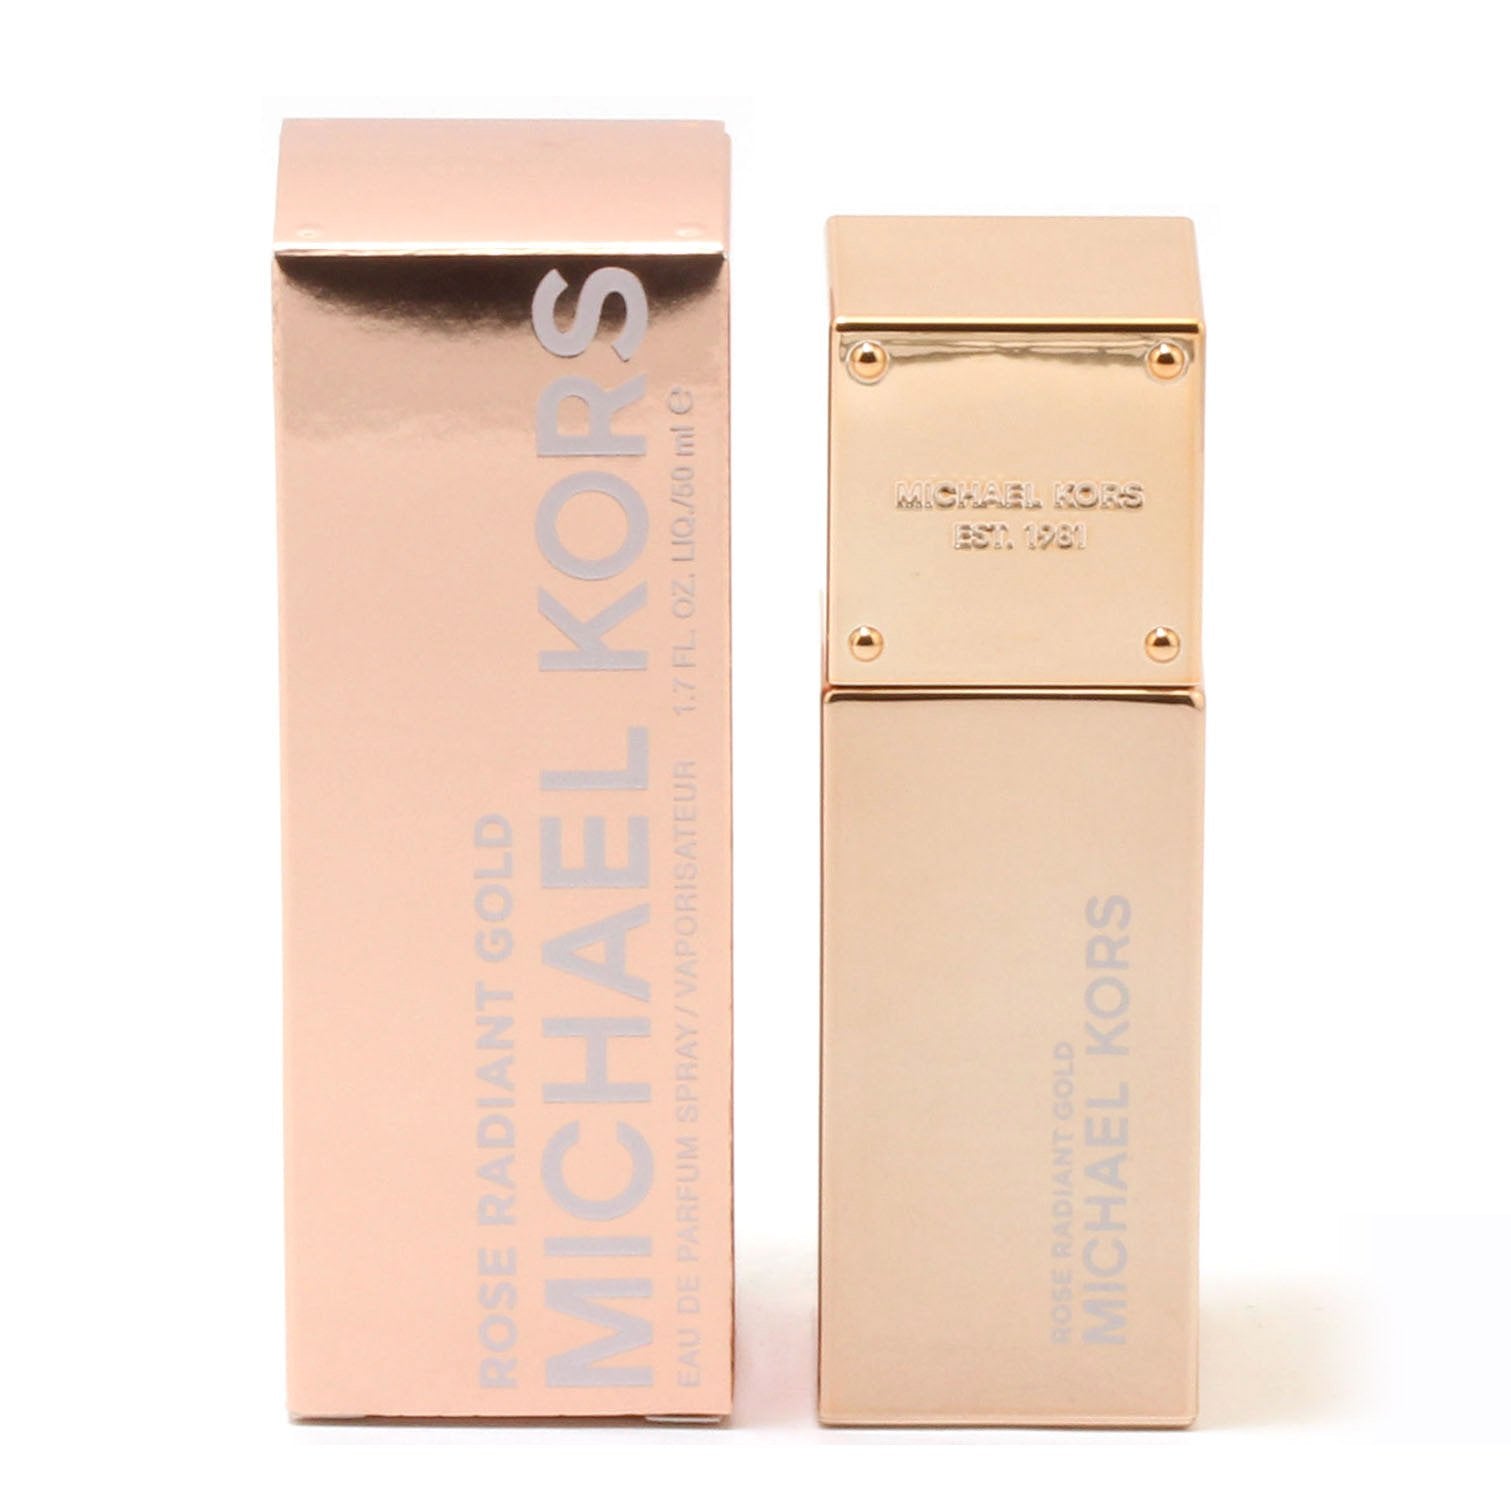 Perfume - MICHAEL KORS ROSE RADIANT GOLD FOR WOMEN - EAU DE PARFUM SPRAY